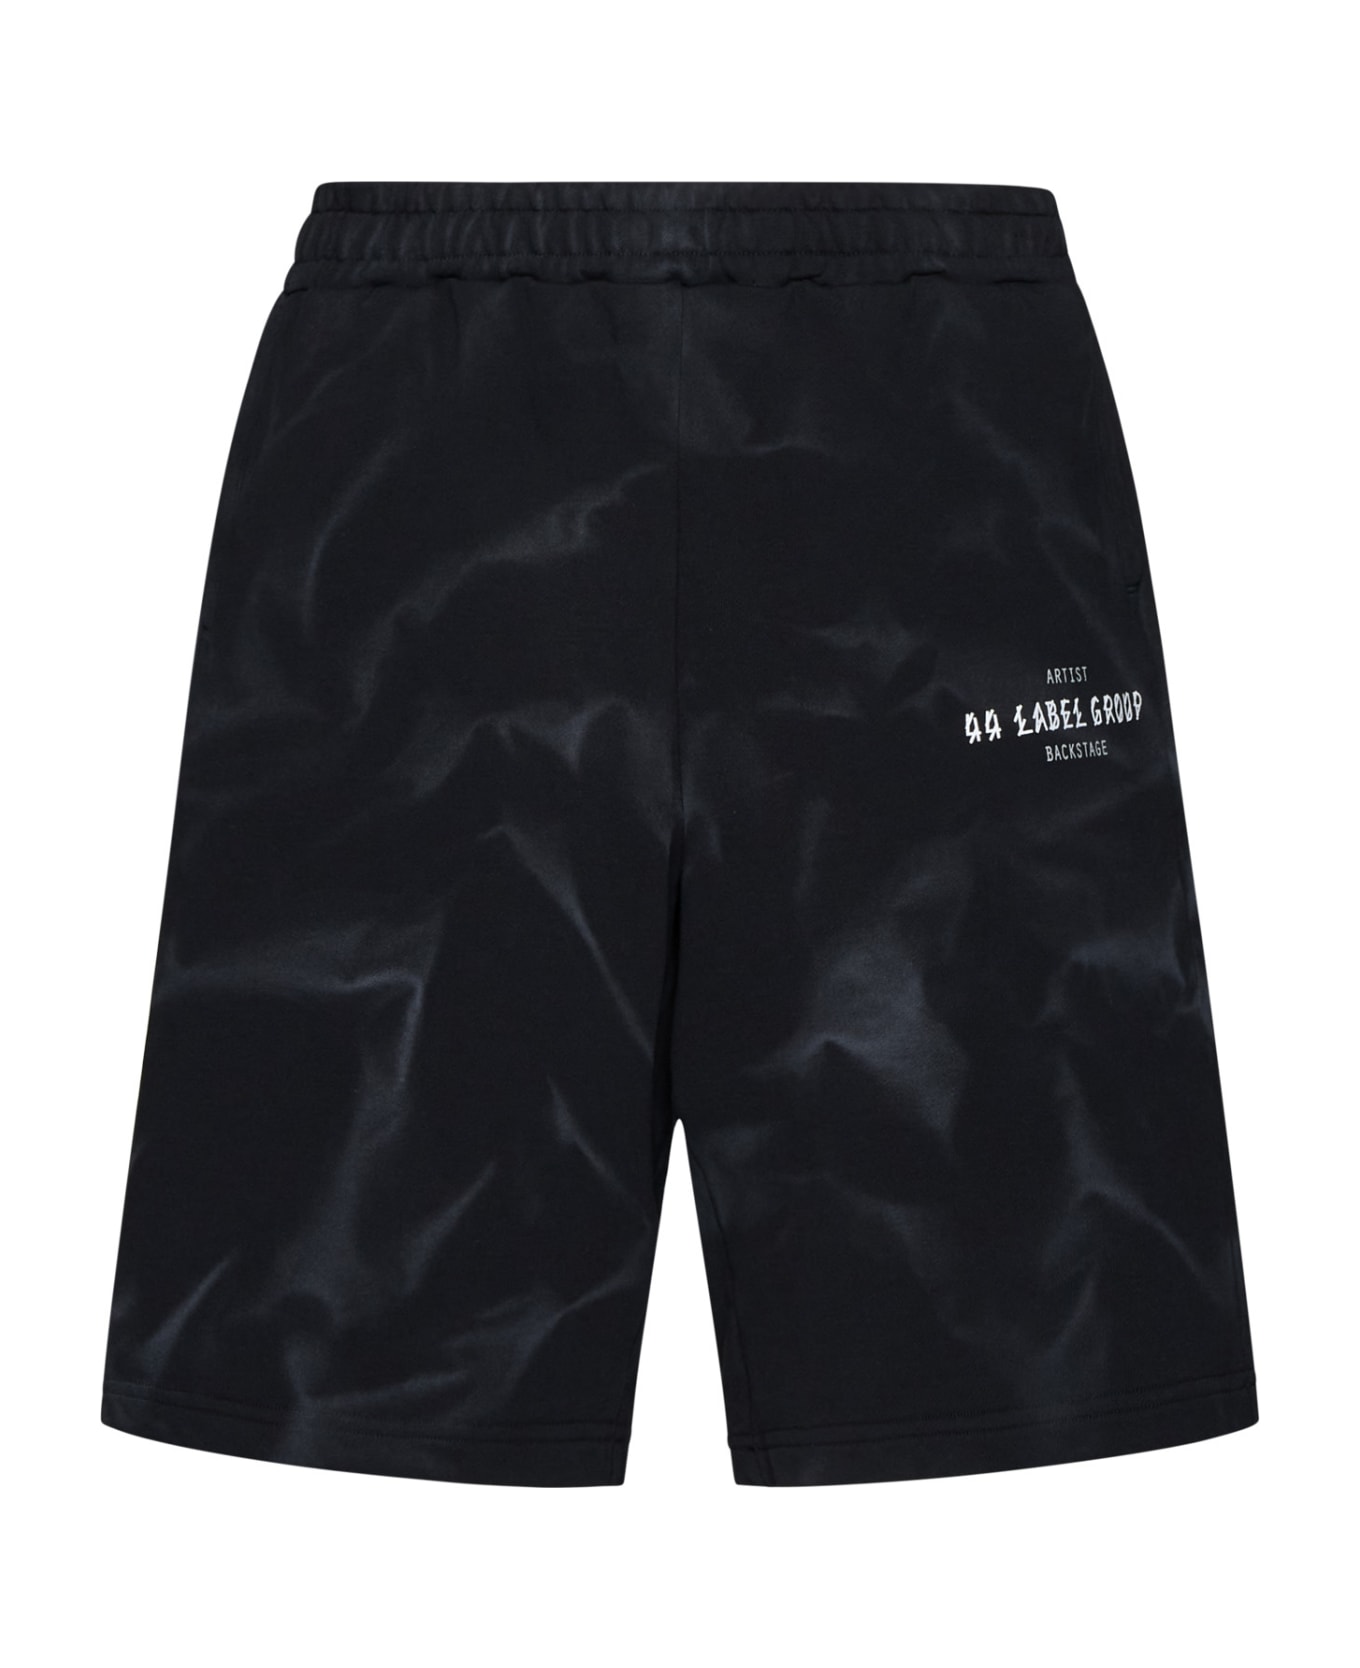 44 Label Group Shorts - Black+effetto smoke ショートパンツ